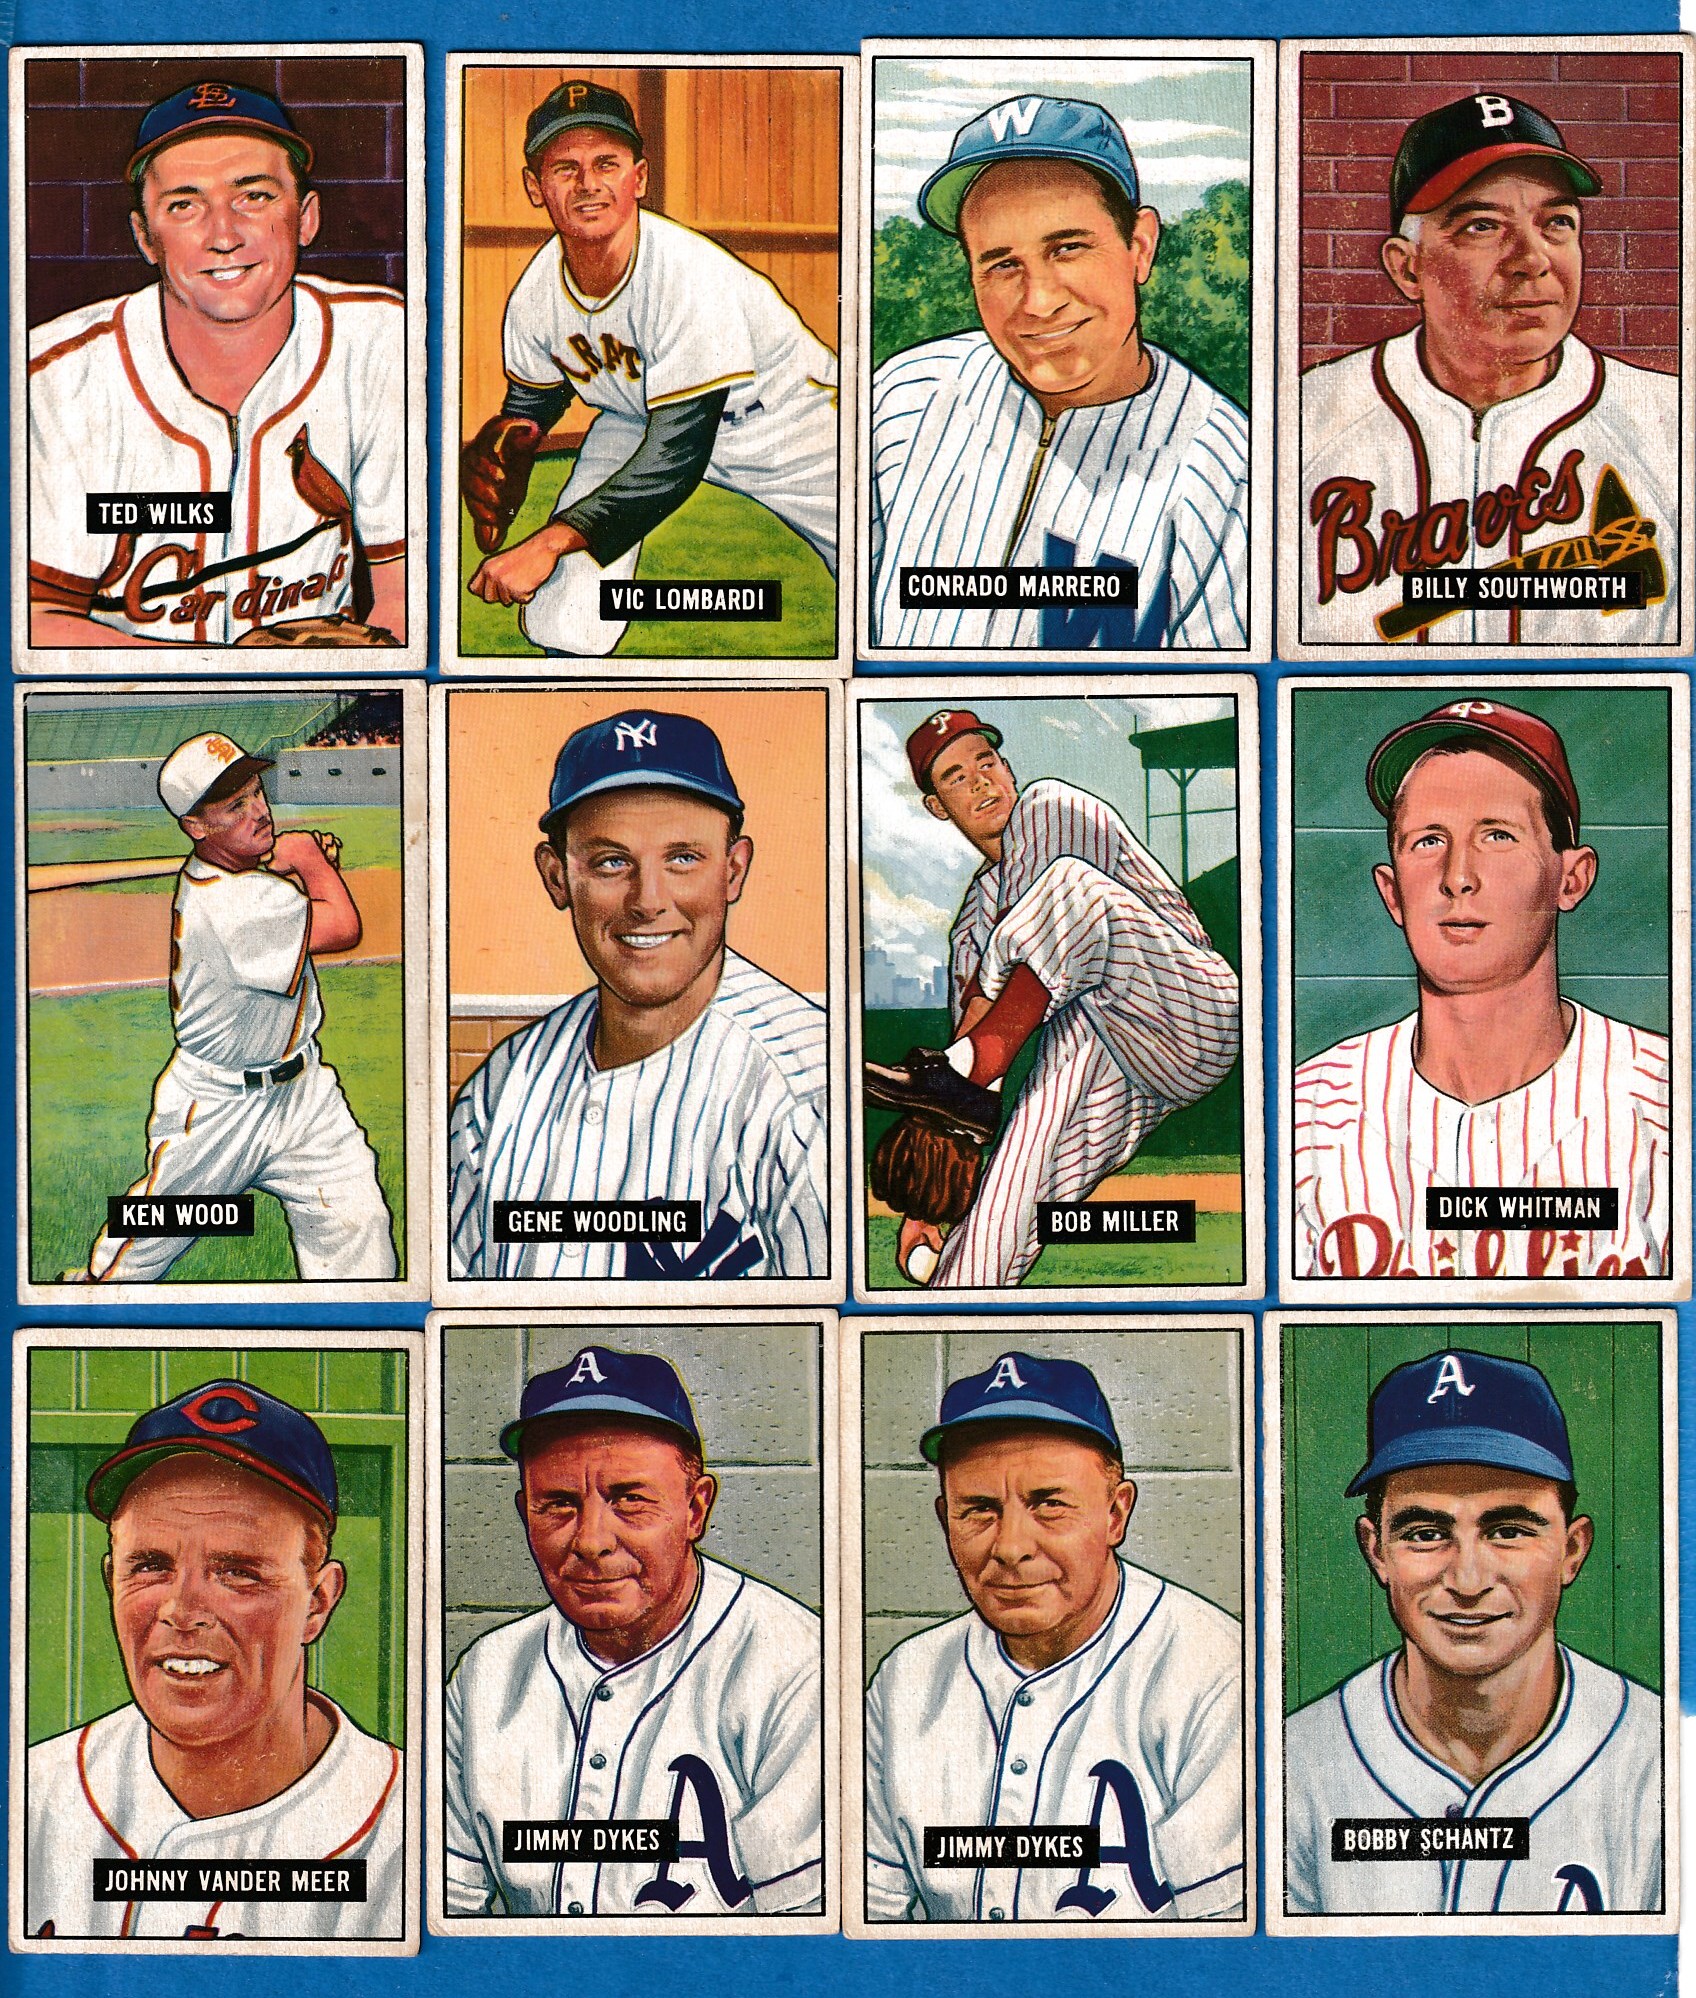 1951 Bowman #219 Gene Woodling ROOKIE [#r] (Yankees) Baseball cards value